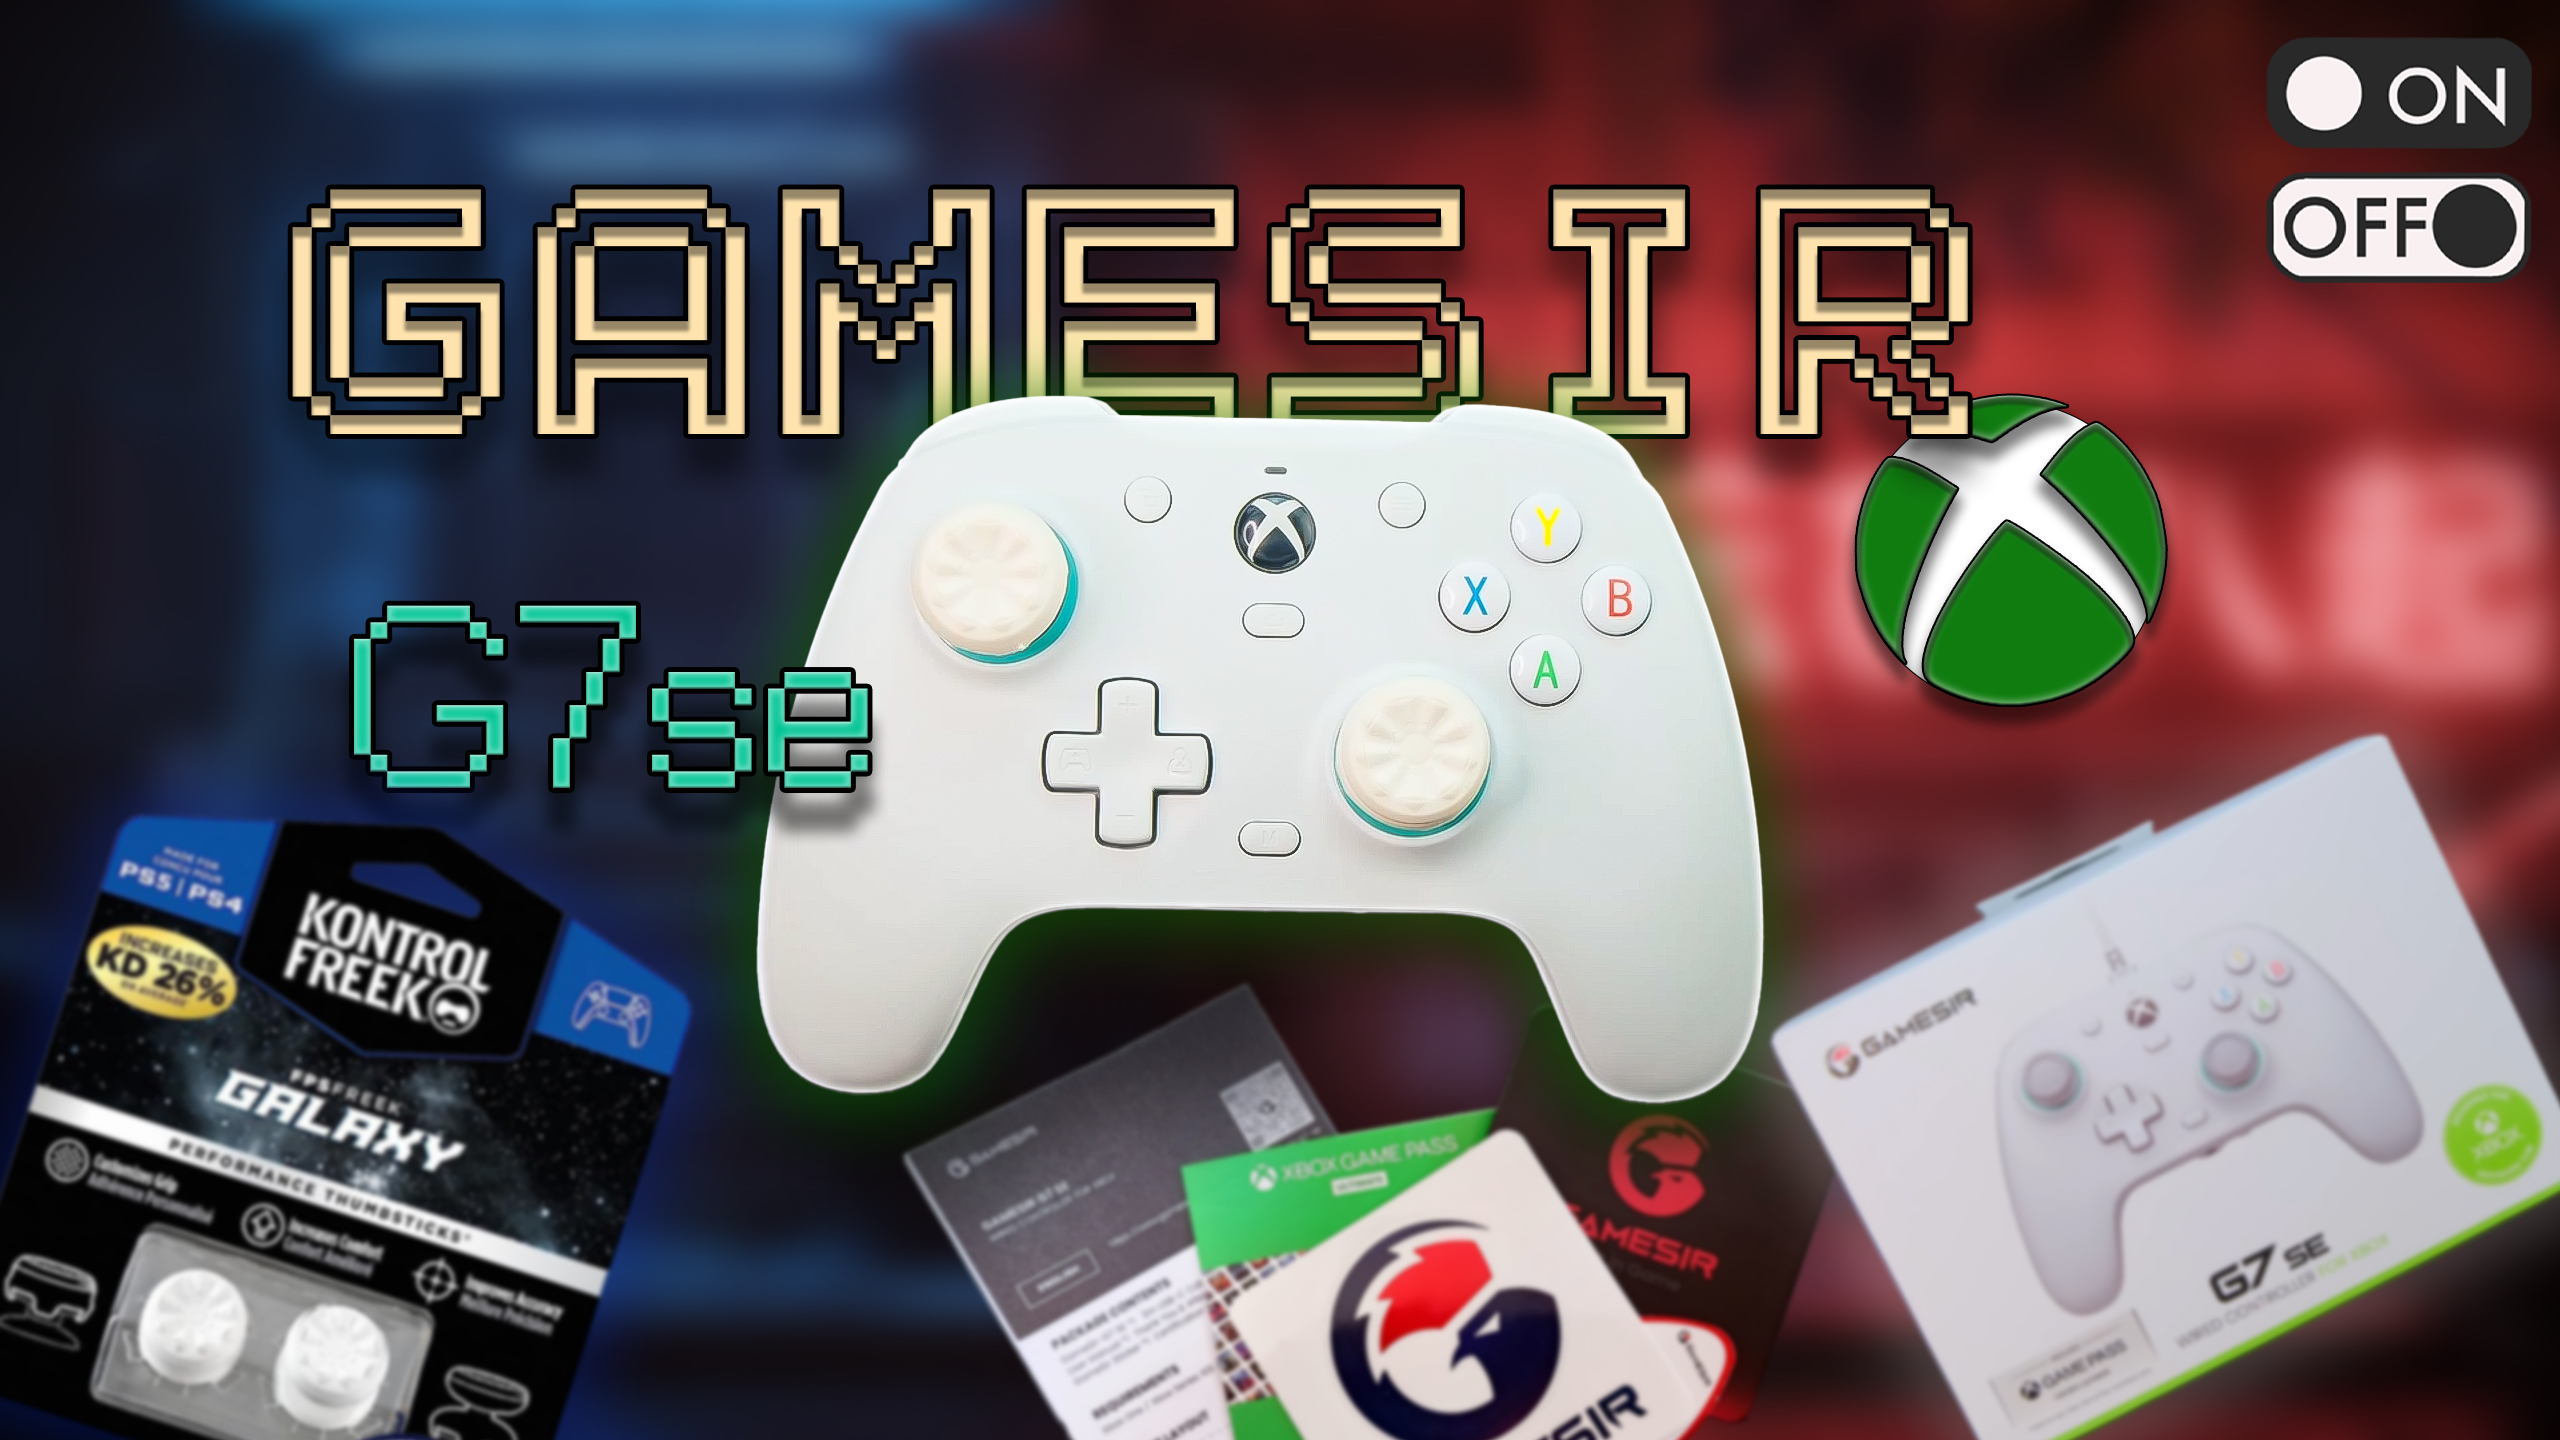 Gamepad GameSir G7 se+application, soudtest+unboxing